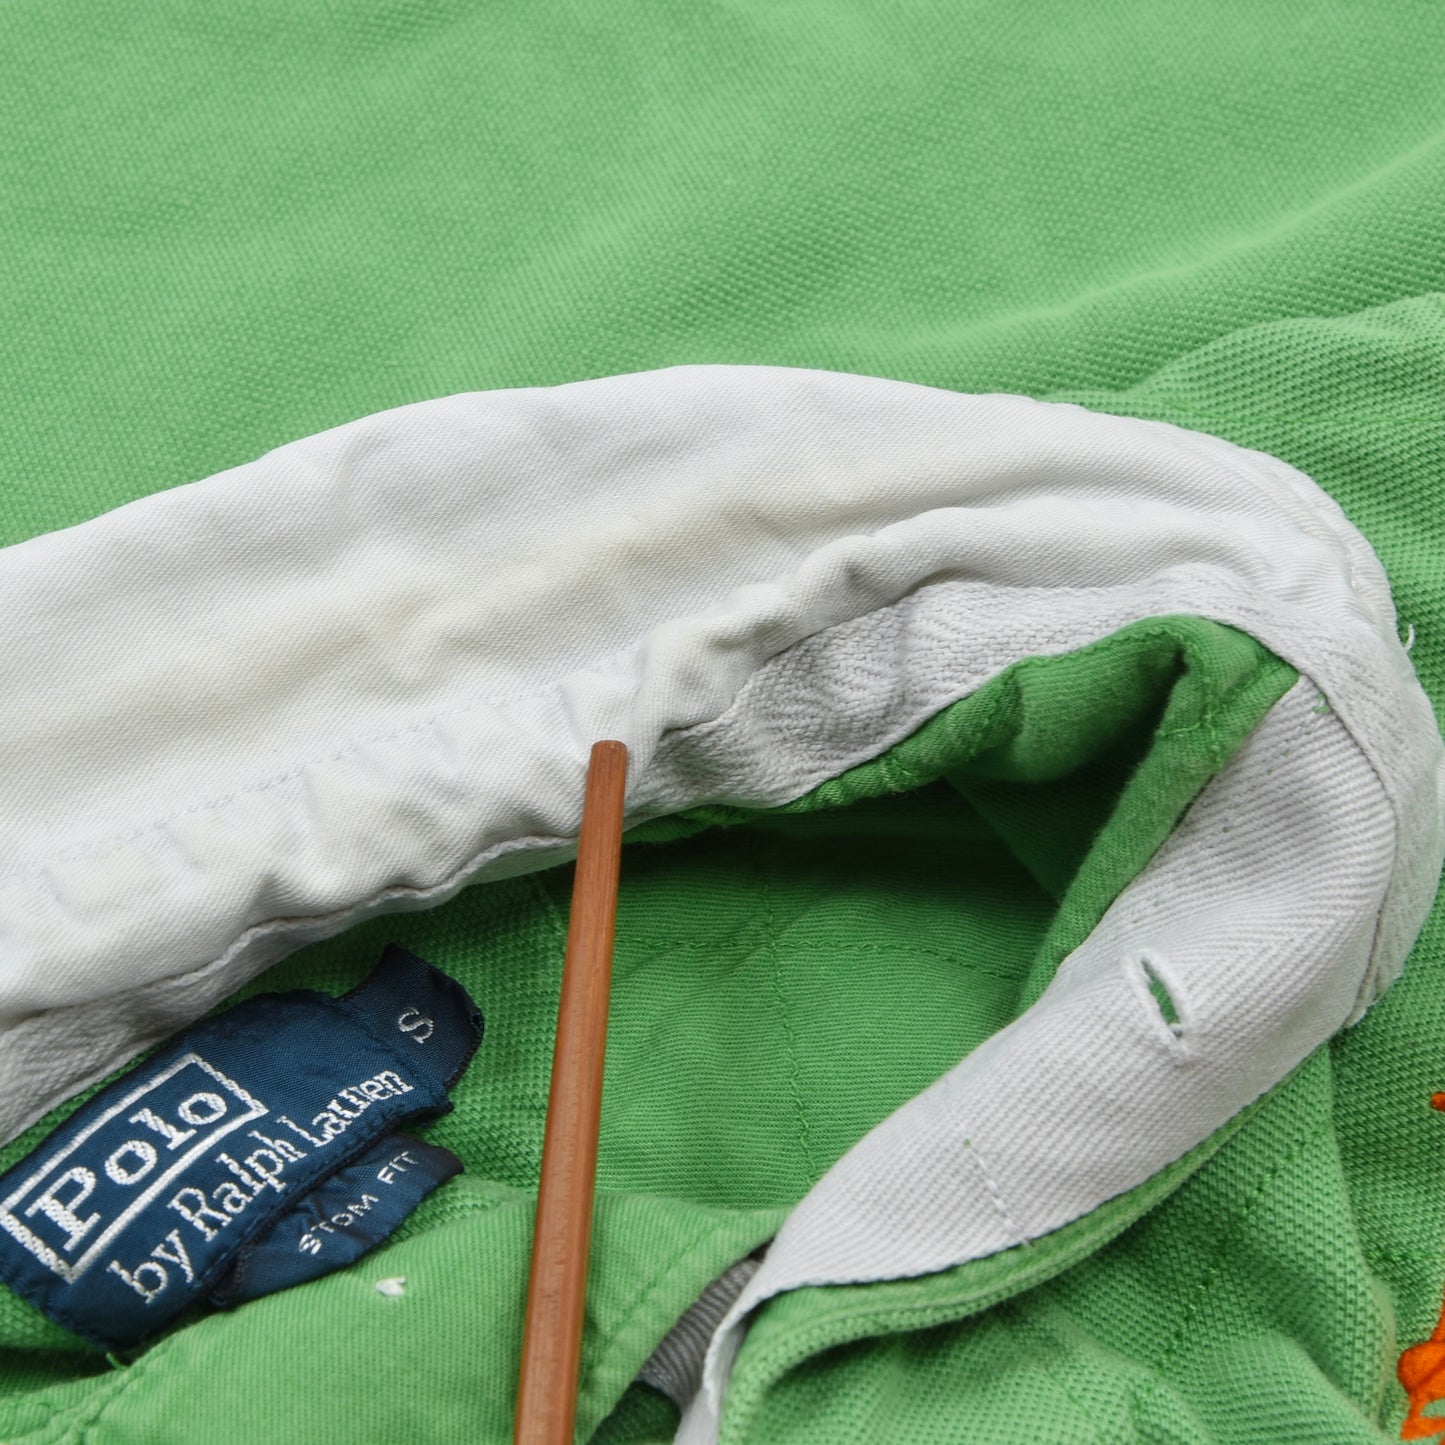 3x Polo Ralph Lauren Polo Shirts Shirts Size S Custom Fit - Blue, Green, Striped